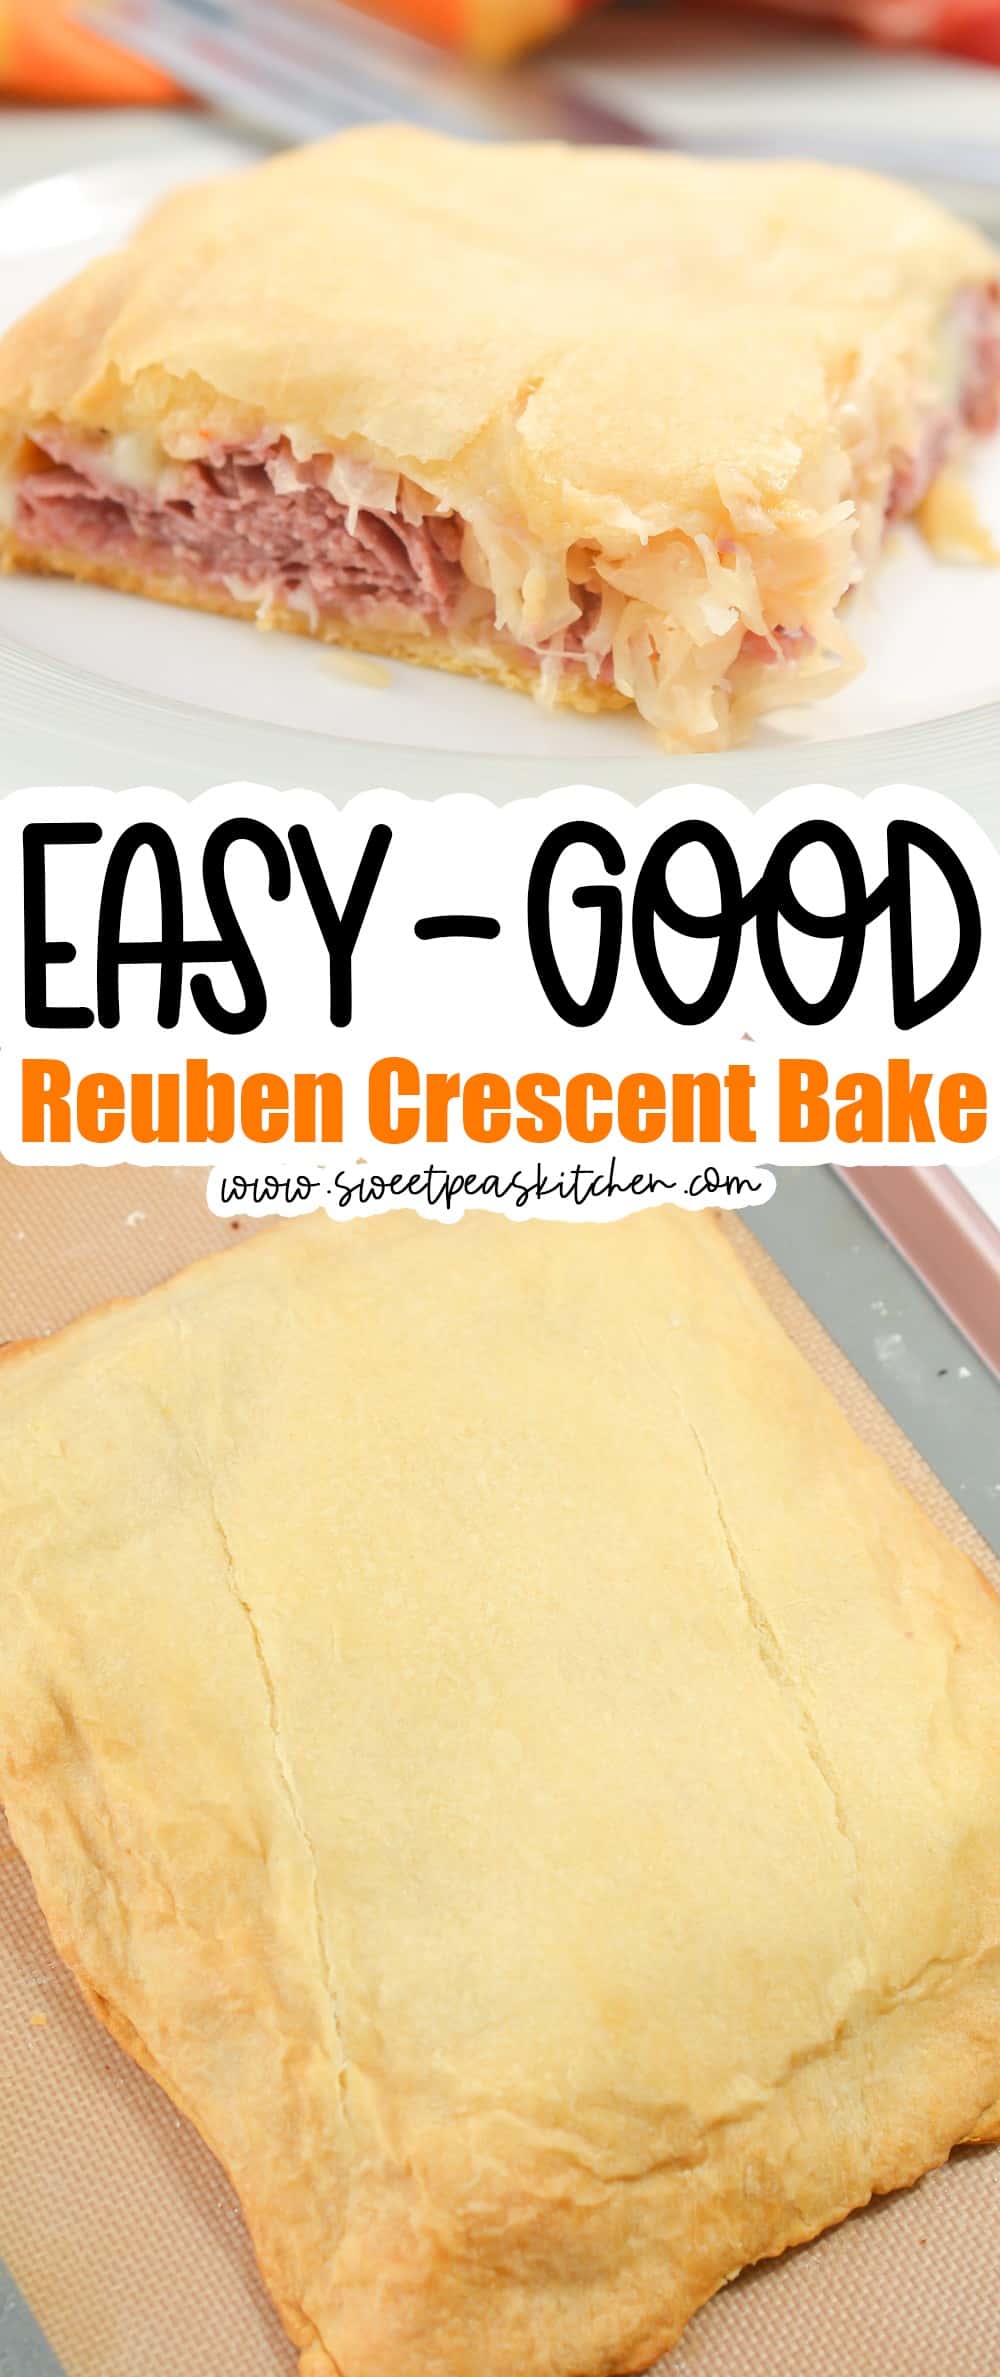 Reuben Crescent Bake